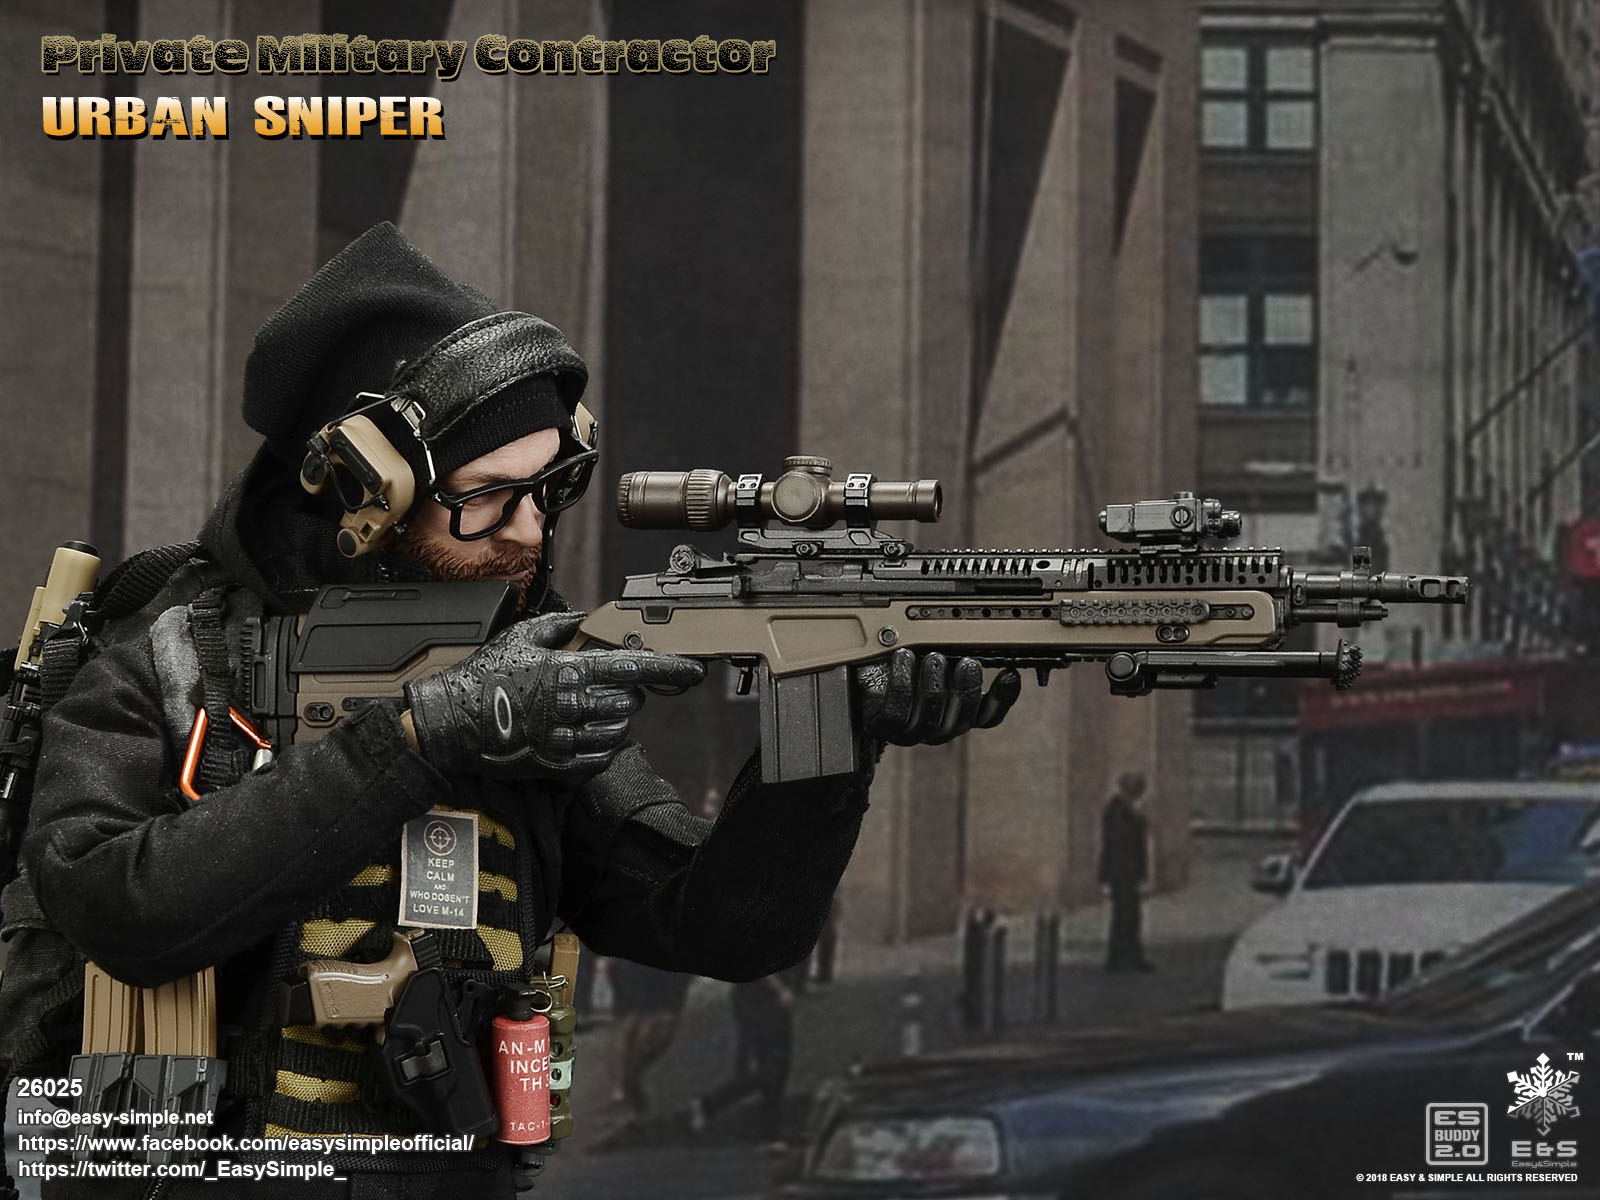 EasyandSimple 26025 Private Military Contractor Urban Sniper